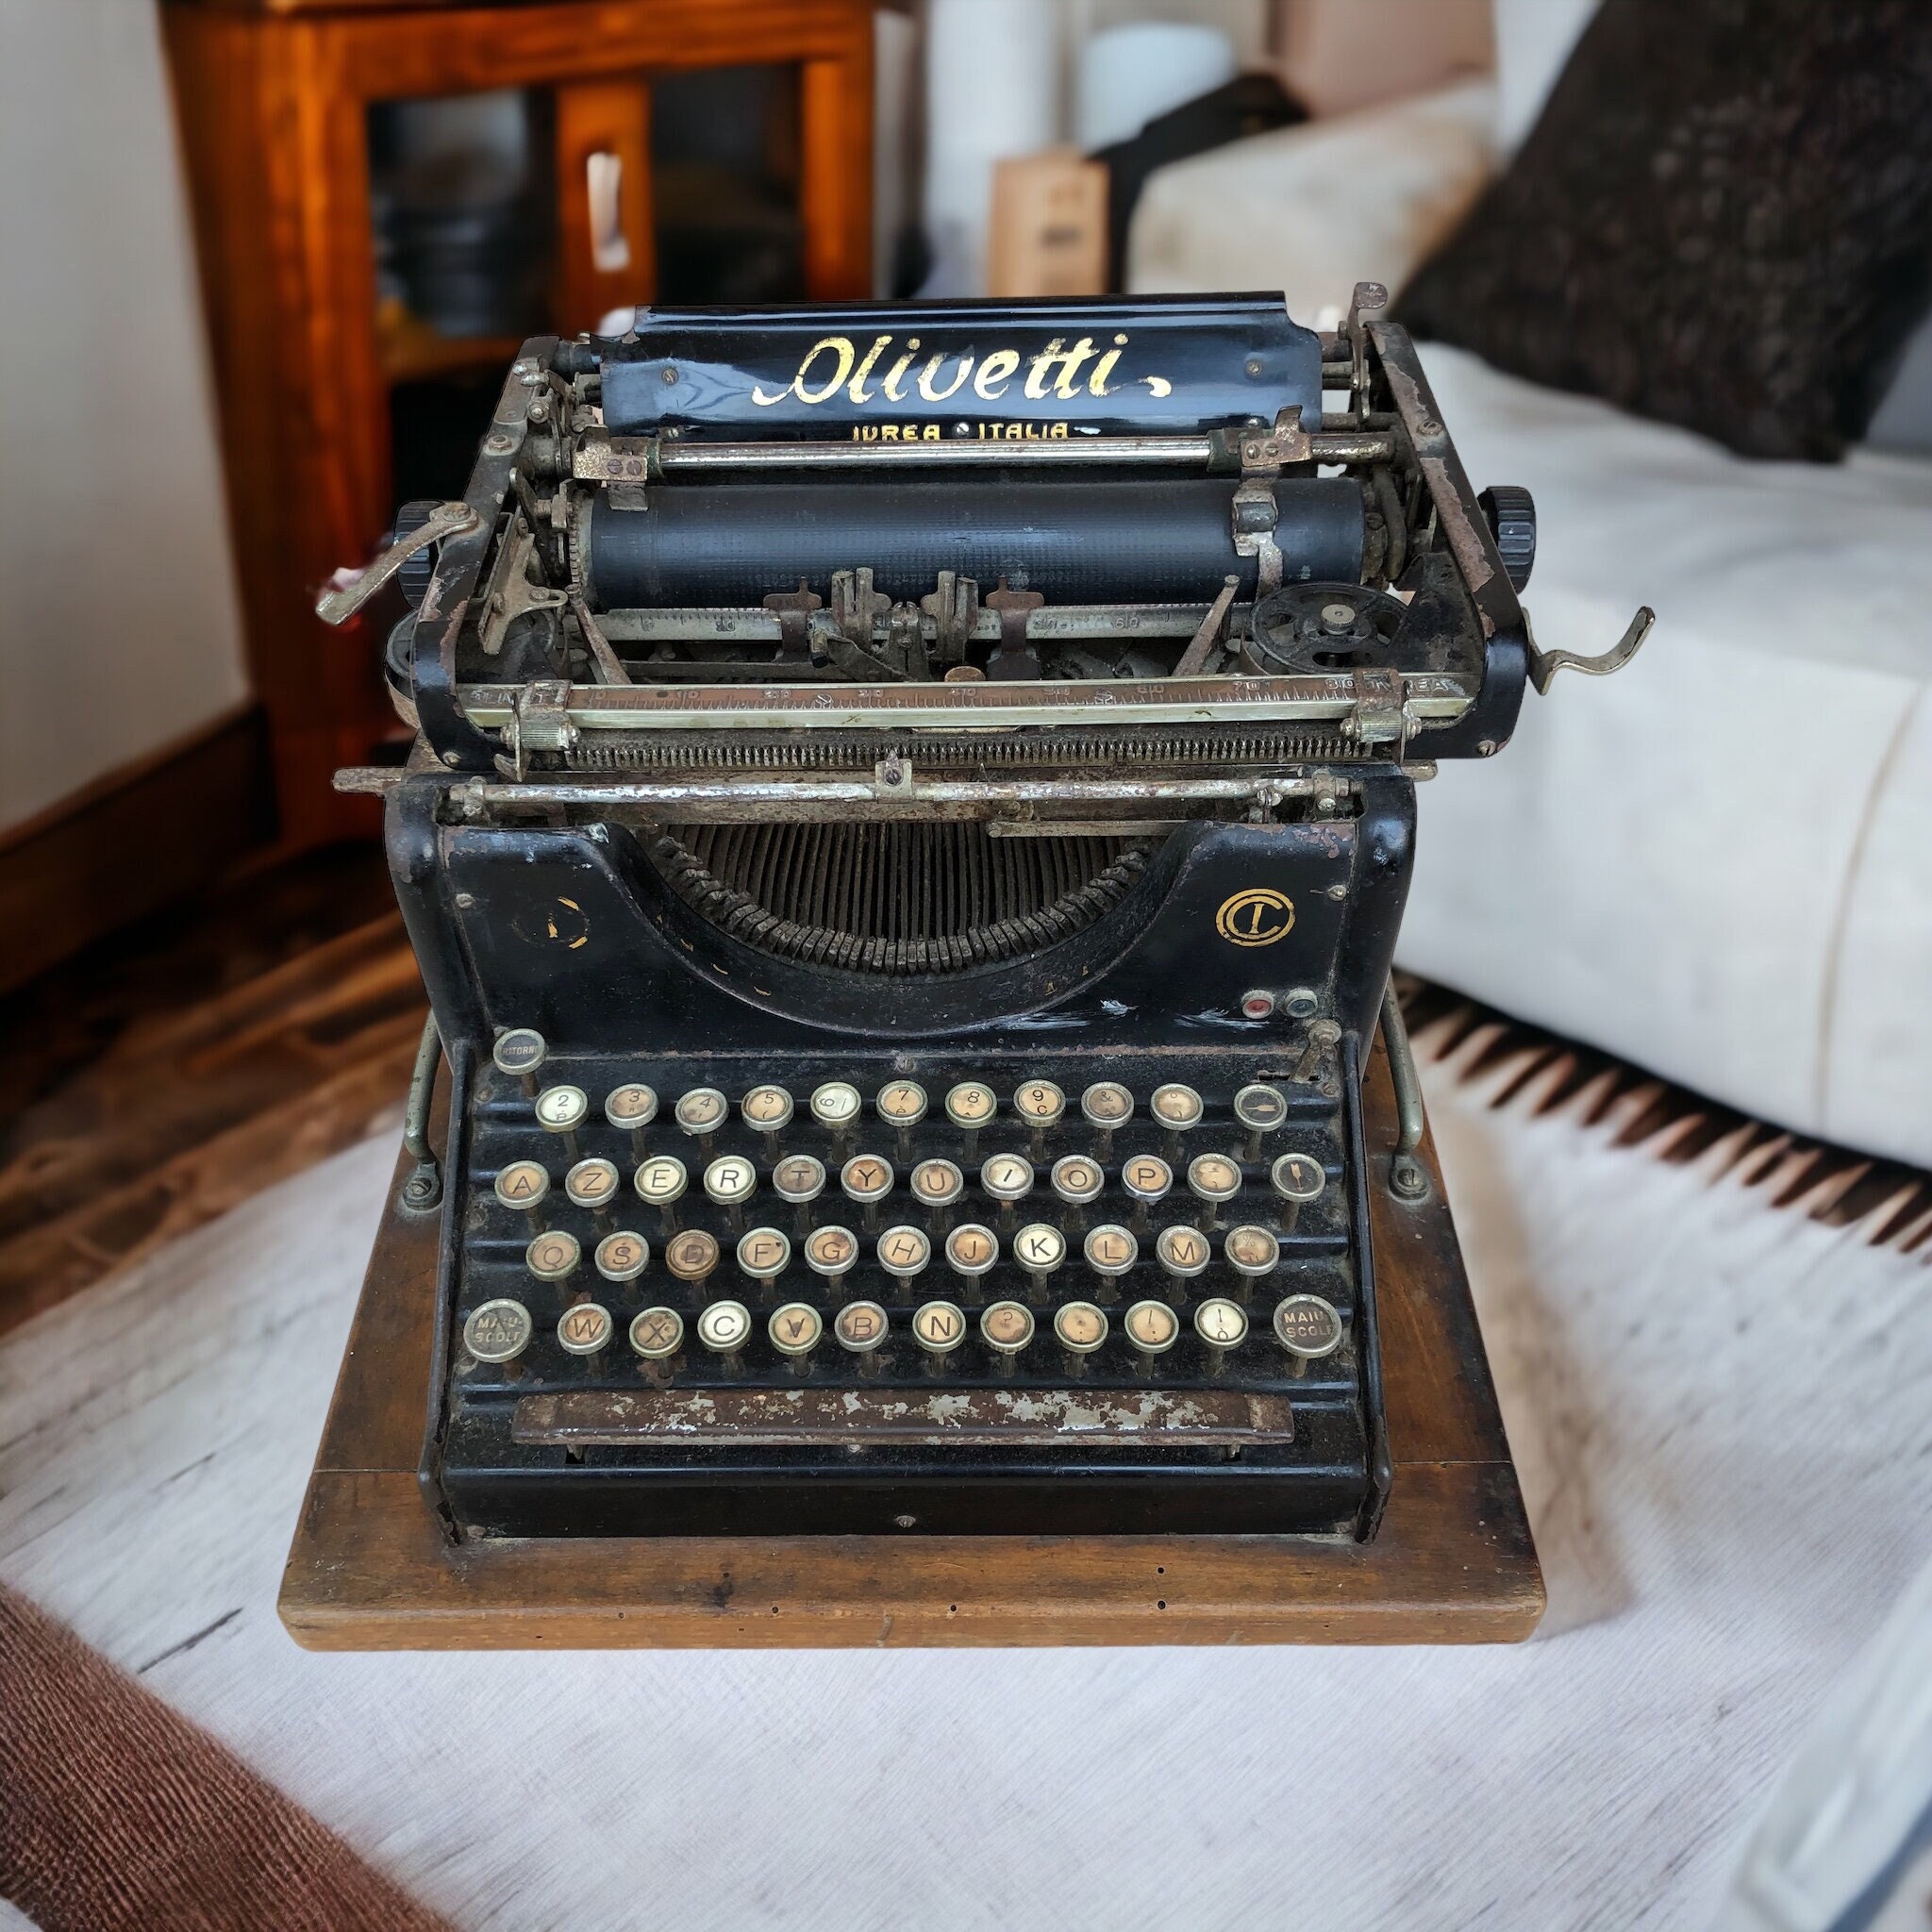 DXYQXL Macchina da scrivere vintage classica retrò – Macchina da scrivere  manuale tradizionale portatile per scrittori, elaboratore di parole  elegante